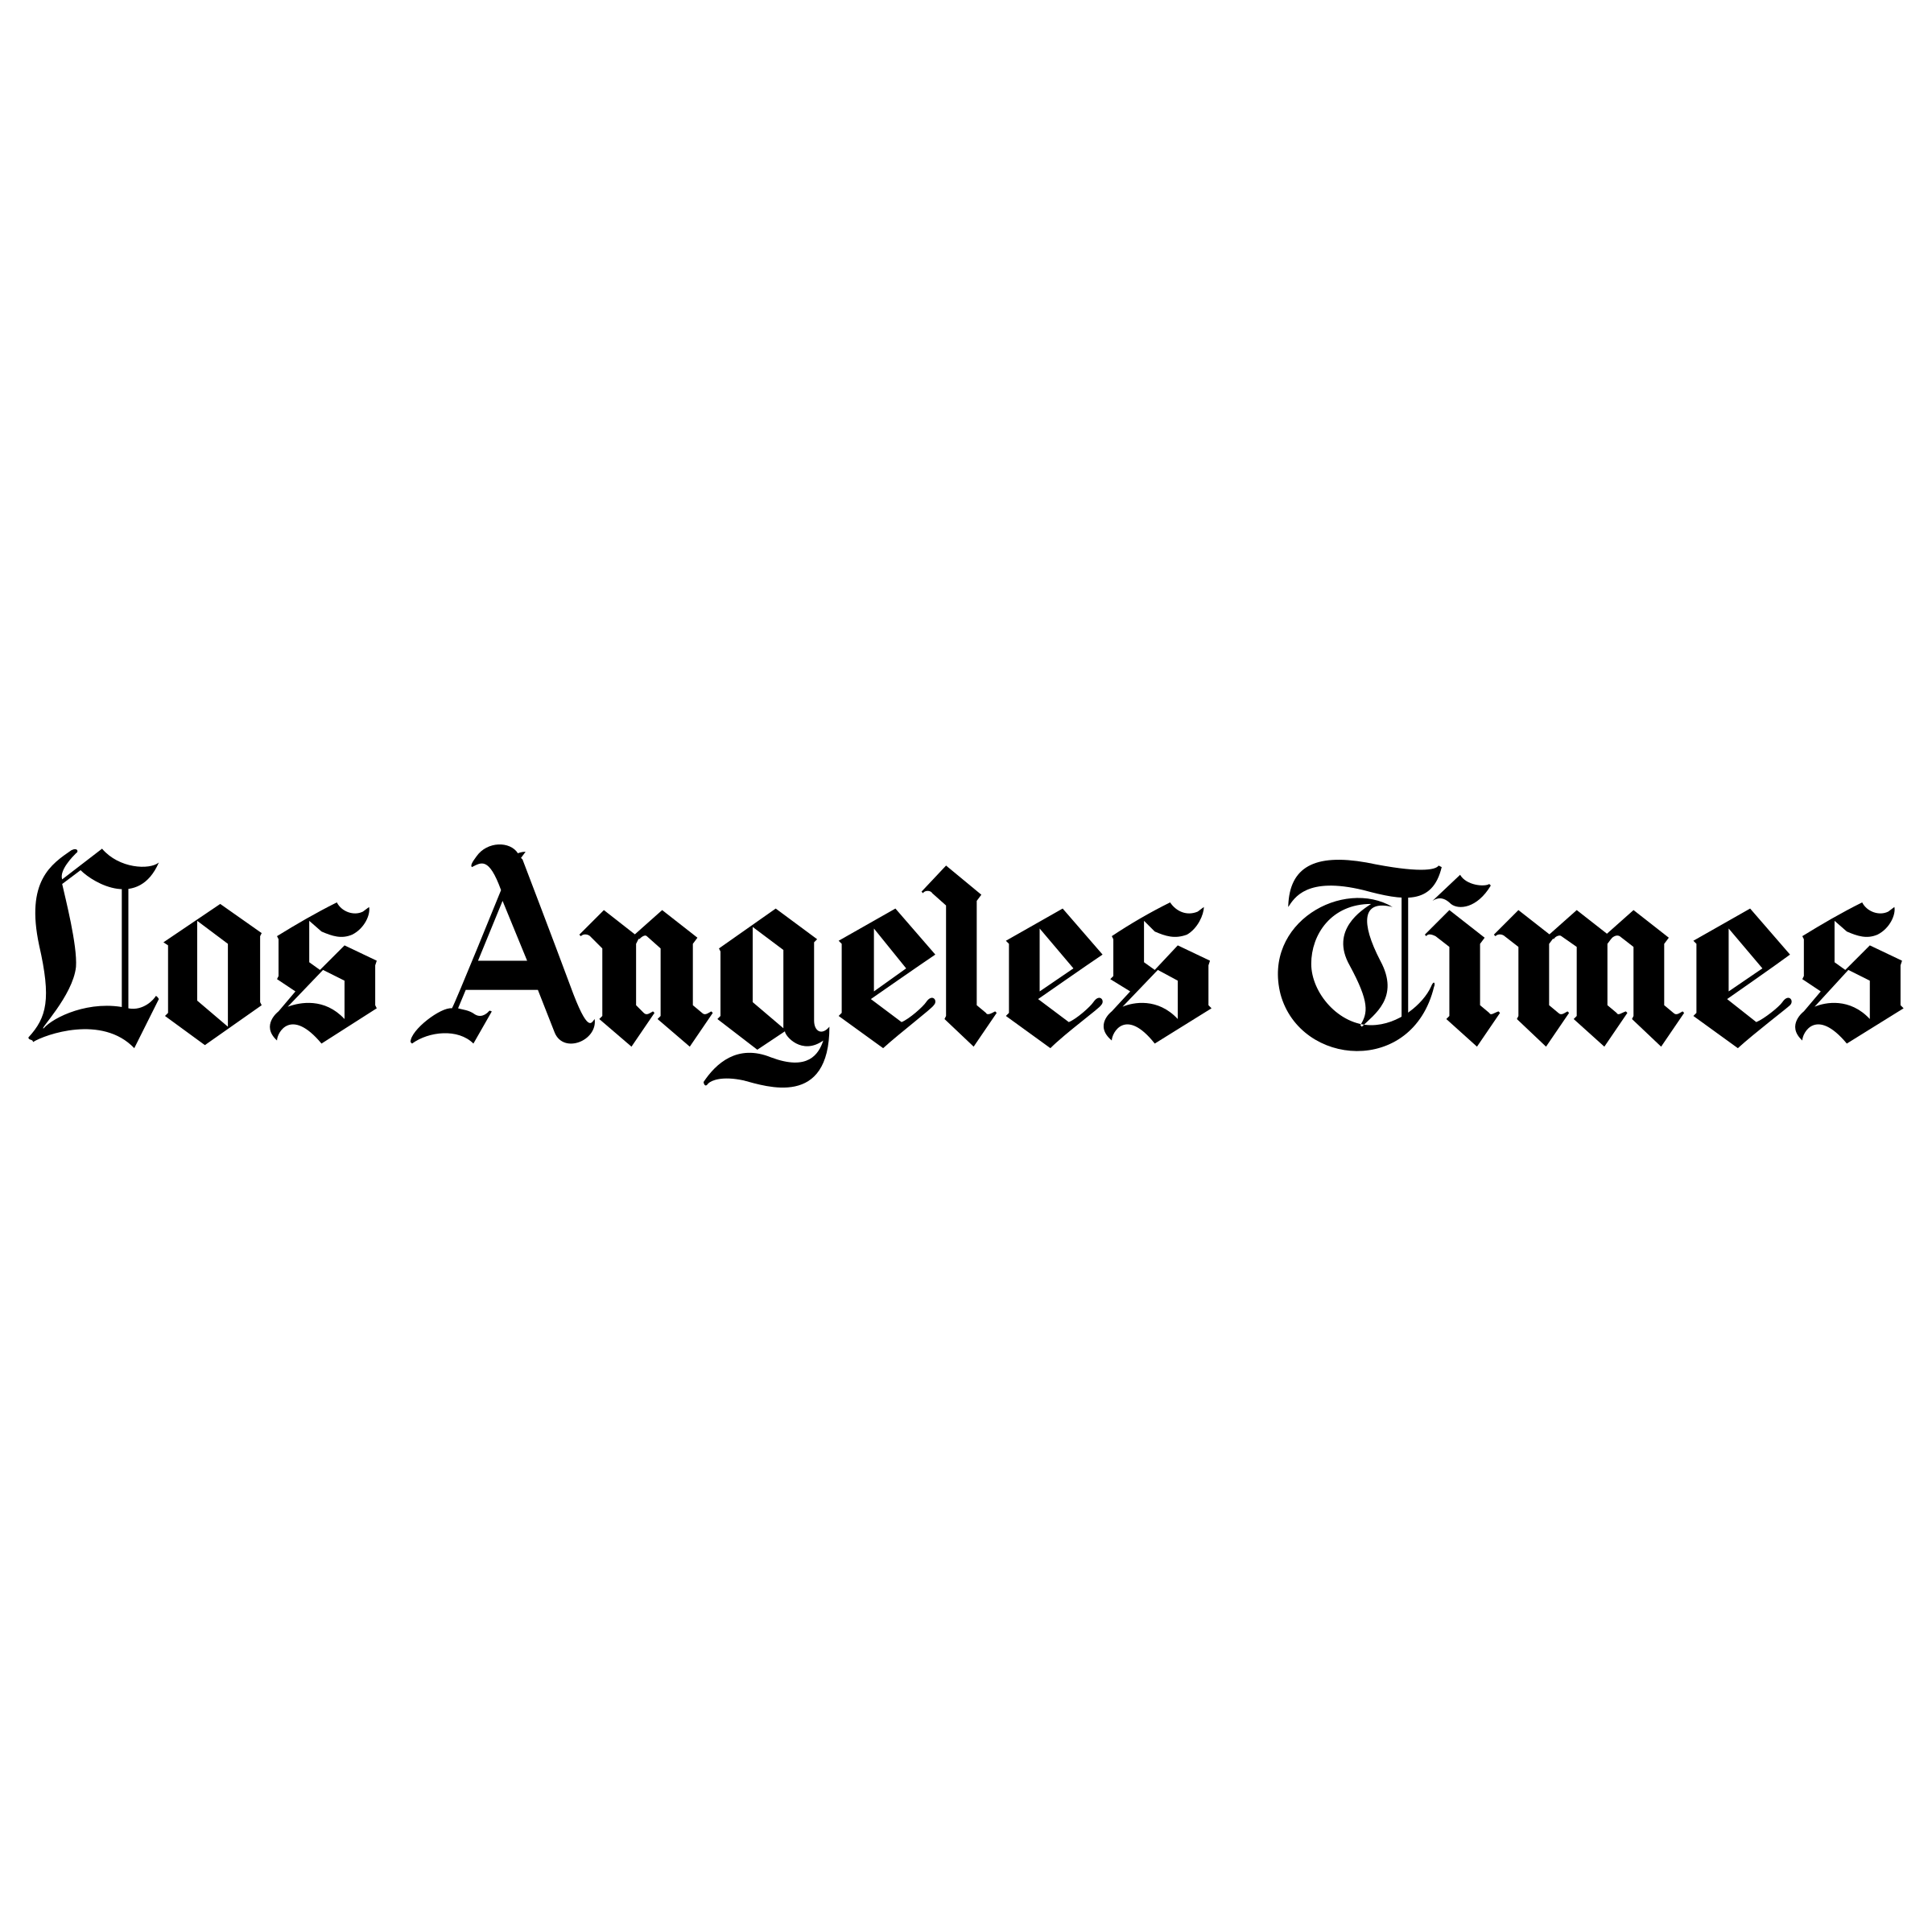 Los Angeles Times Logo PNG Transparent & SVG Vector.